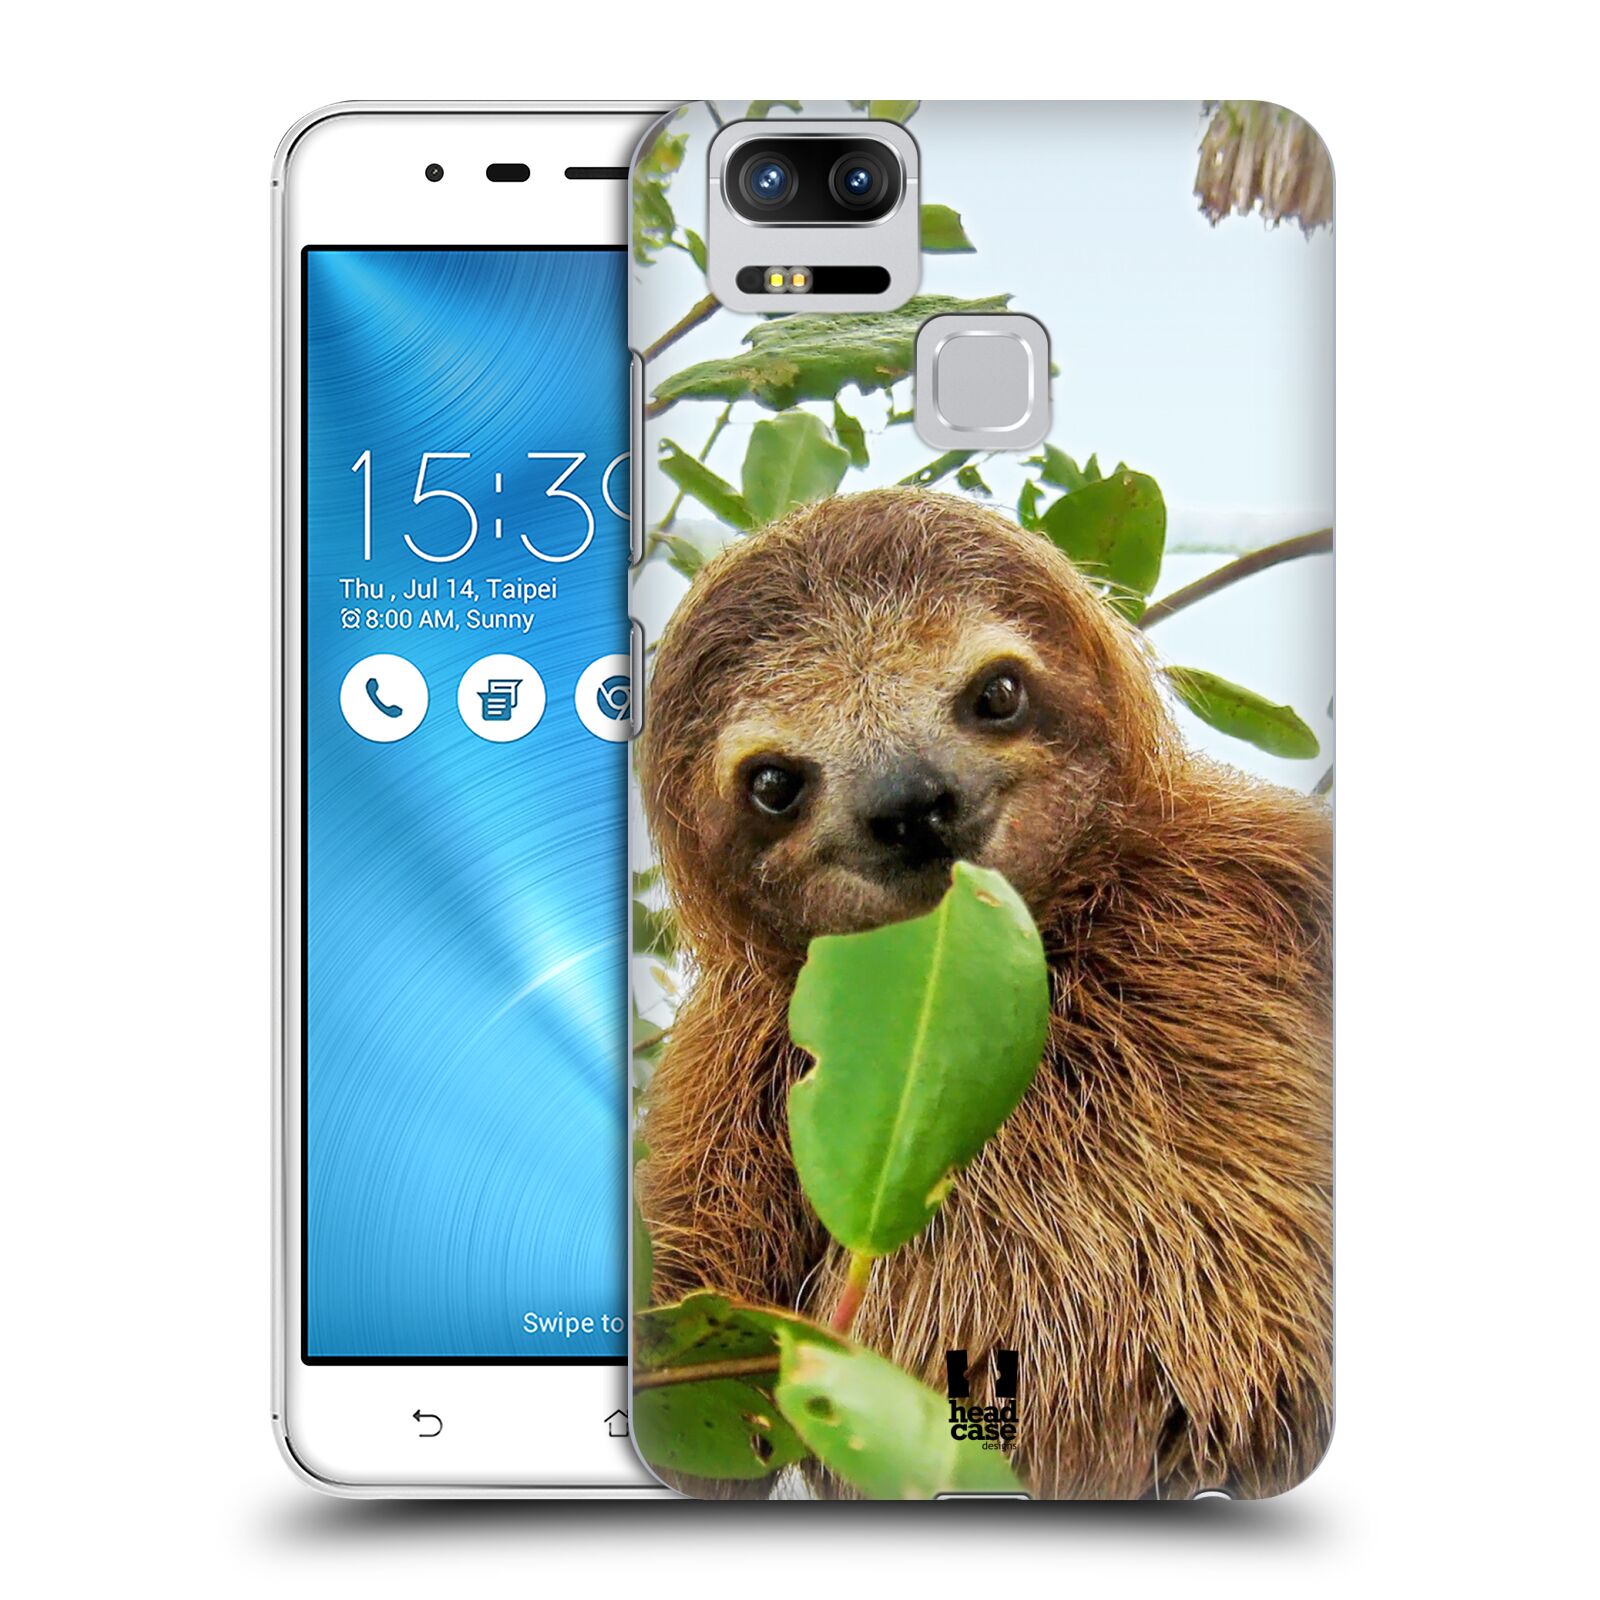 HEAD CASE plastový obal na mobil Asus Zenfone 3 Zoom ZE553KL vzor slavná zvířata foto lenochod